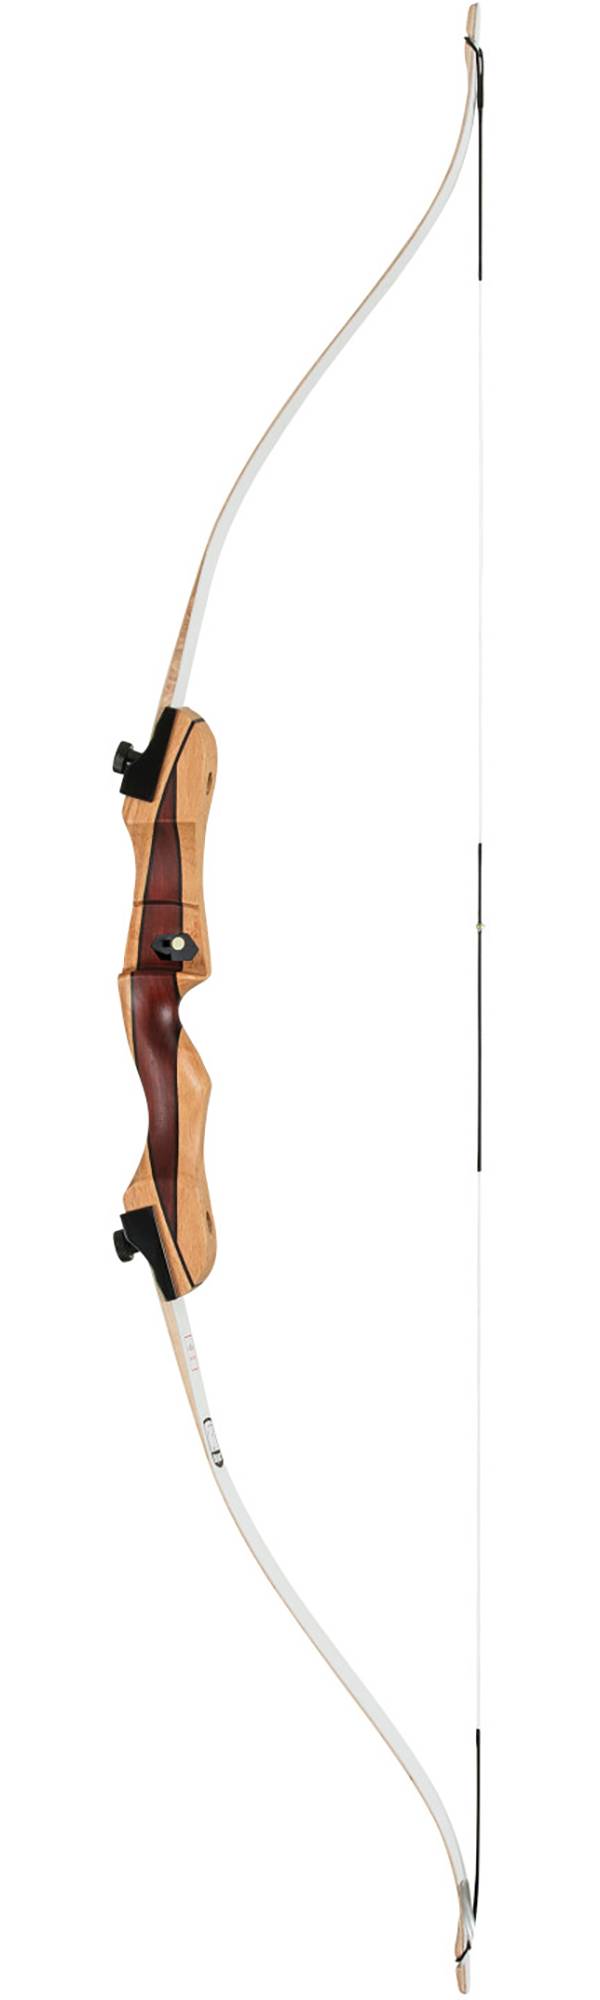 Bear Archery Bullseye X Youth 62” Recurve Bow product image